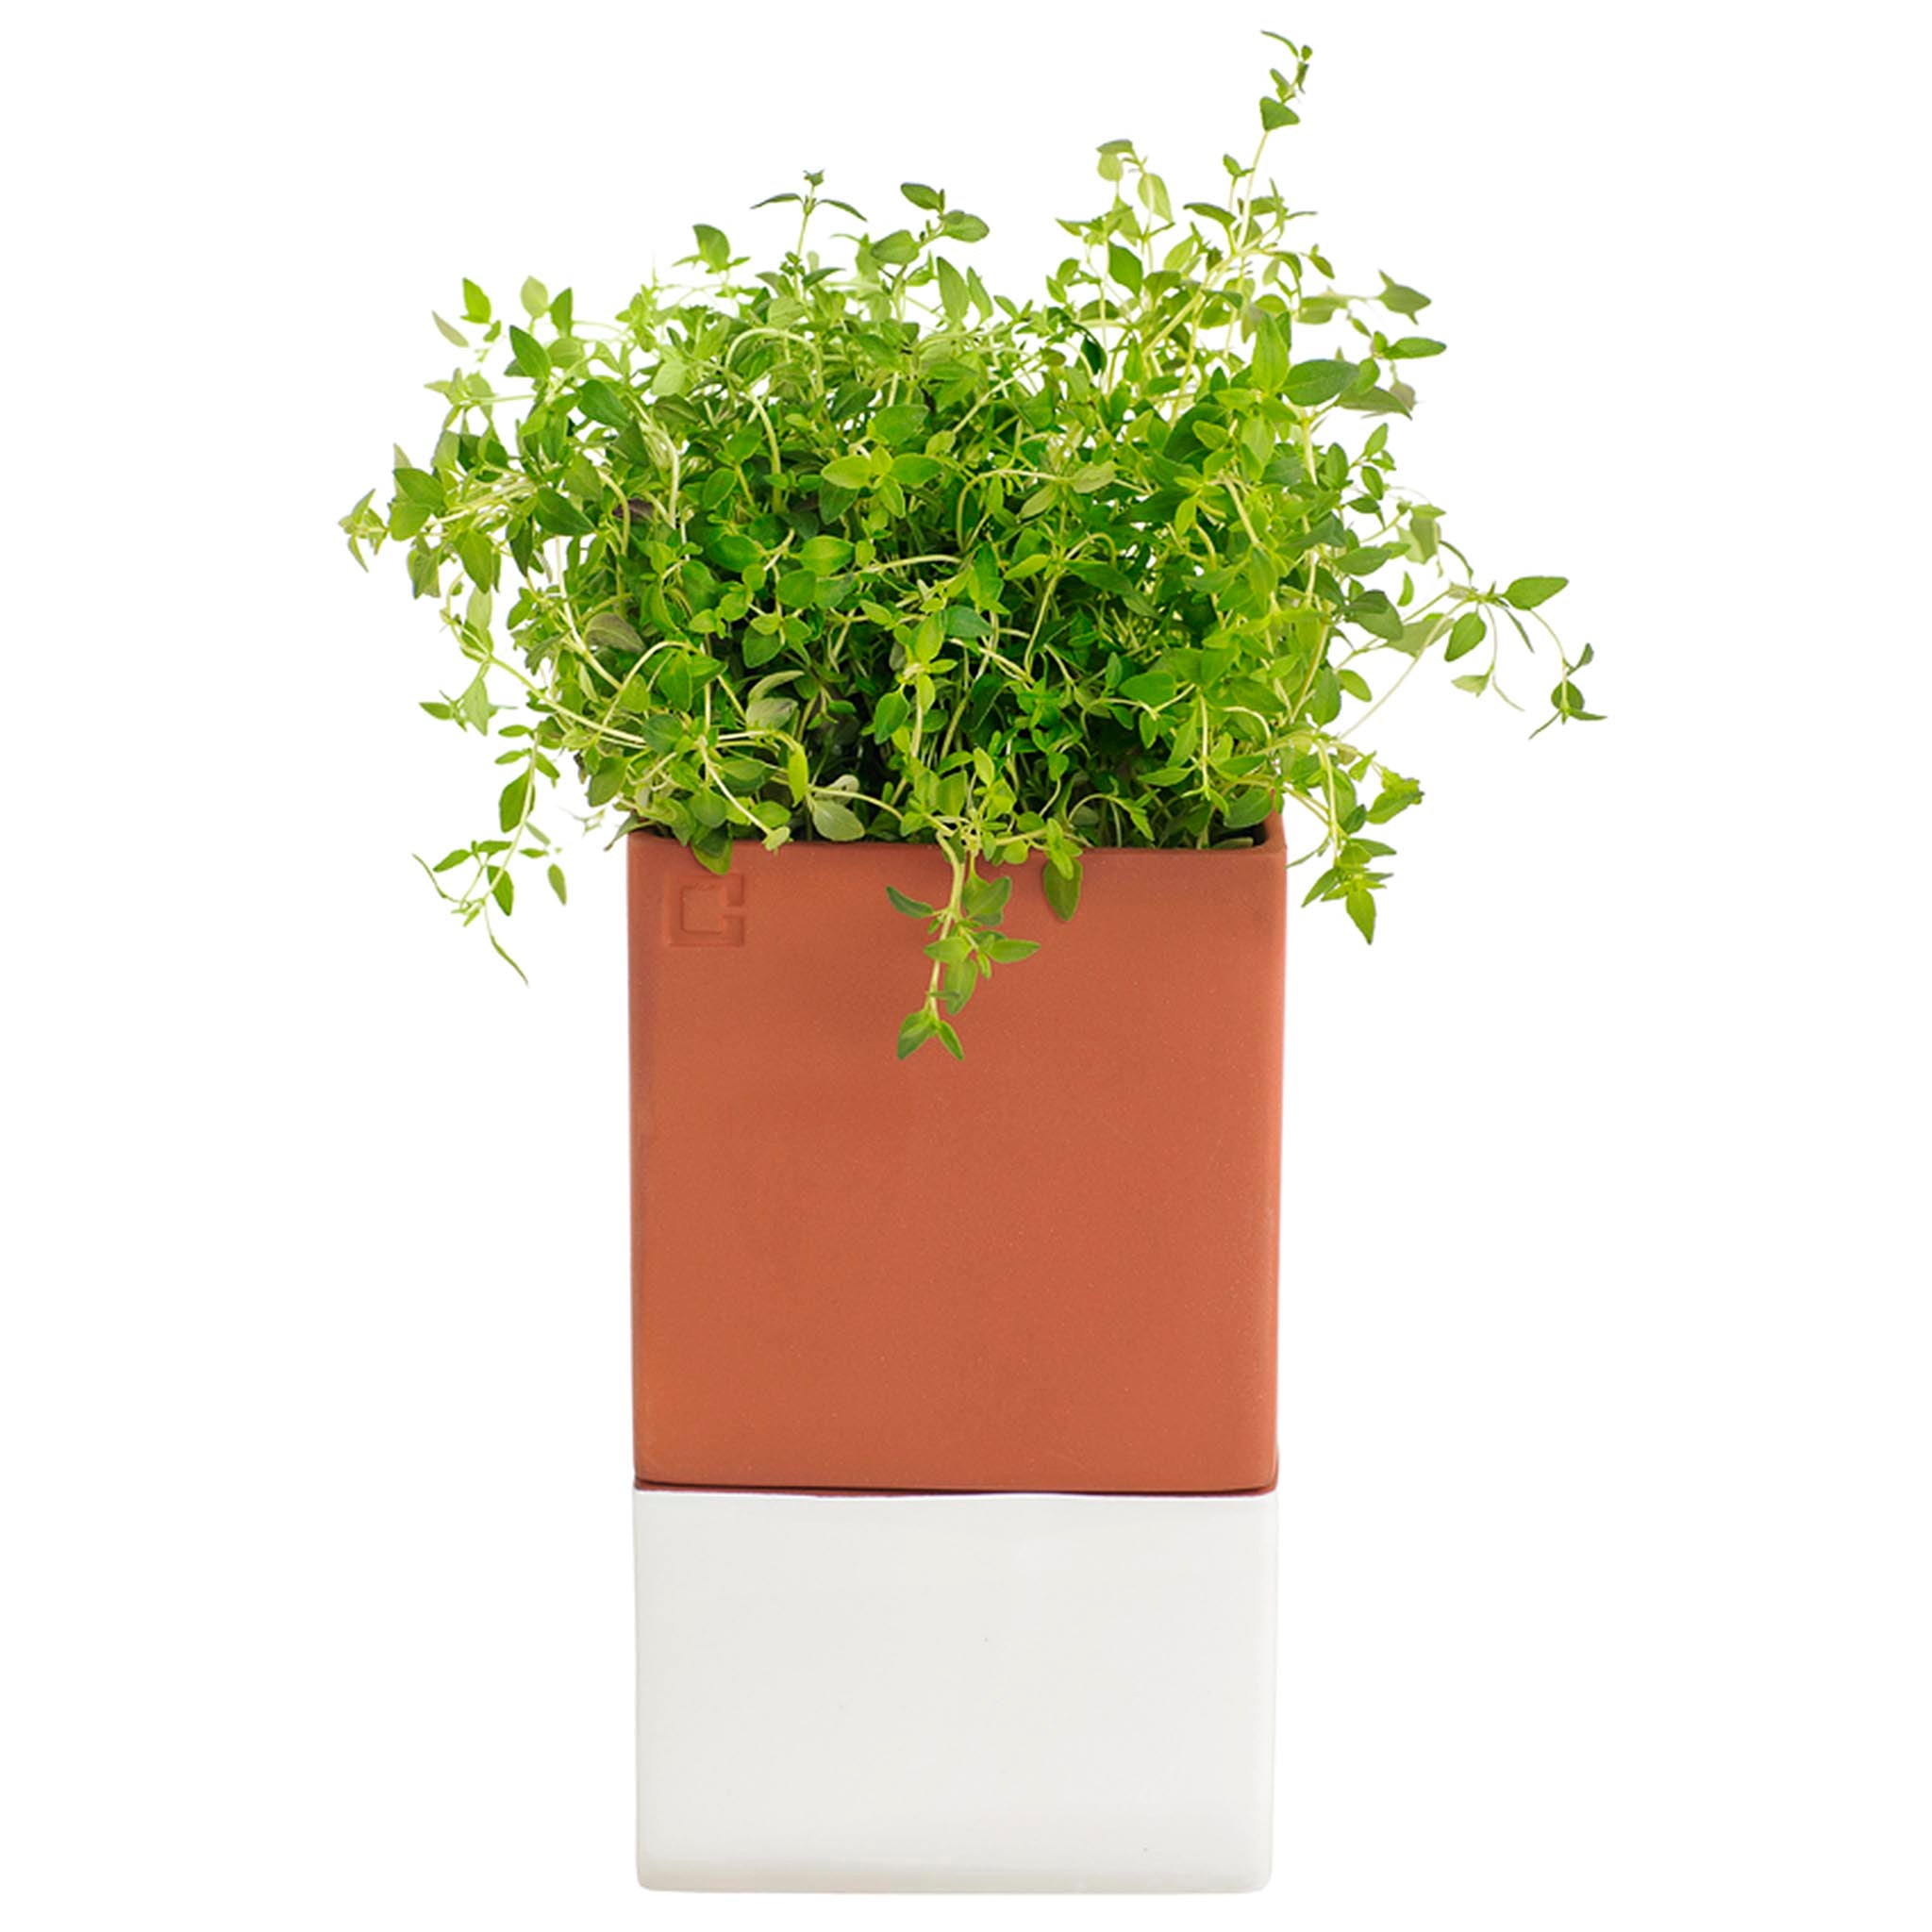 Cult Design Large Evergreen Self-Watering Herb Pot